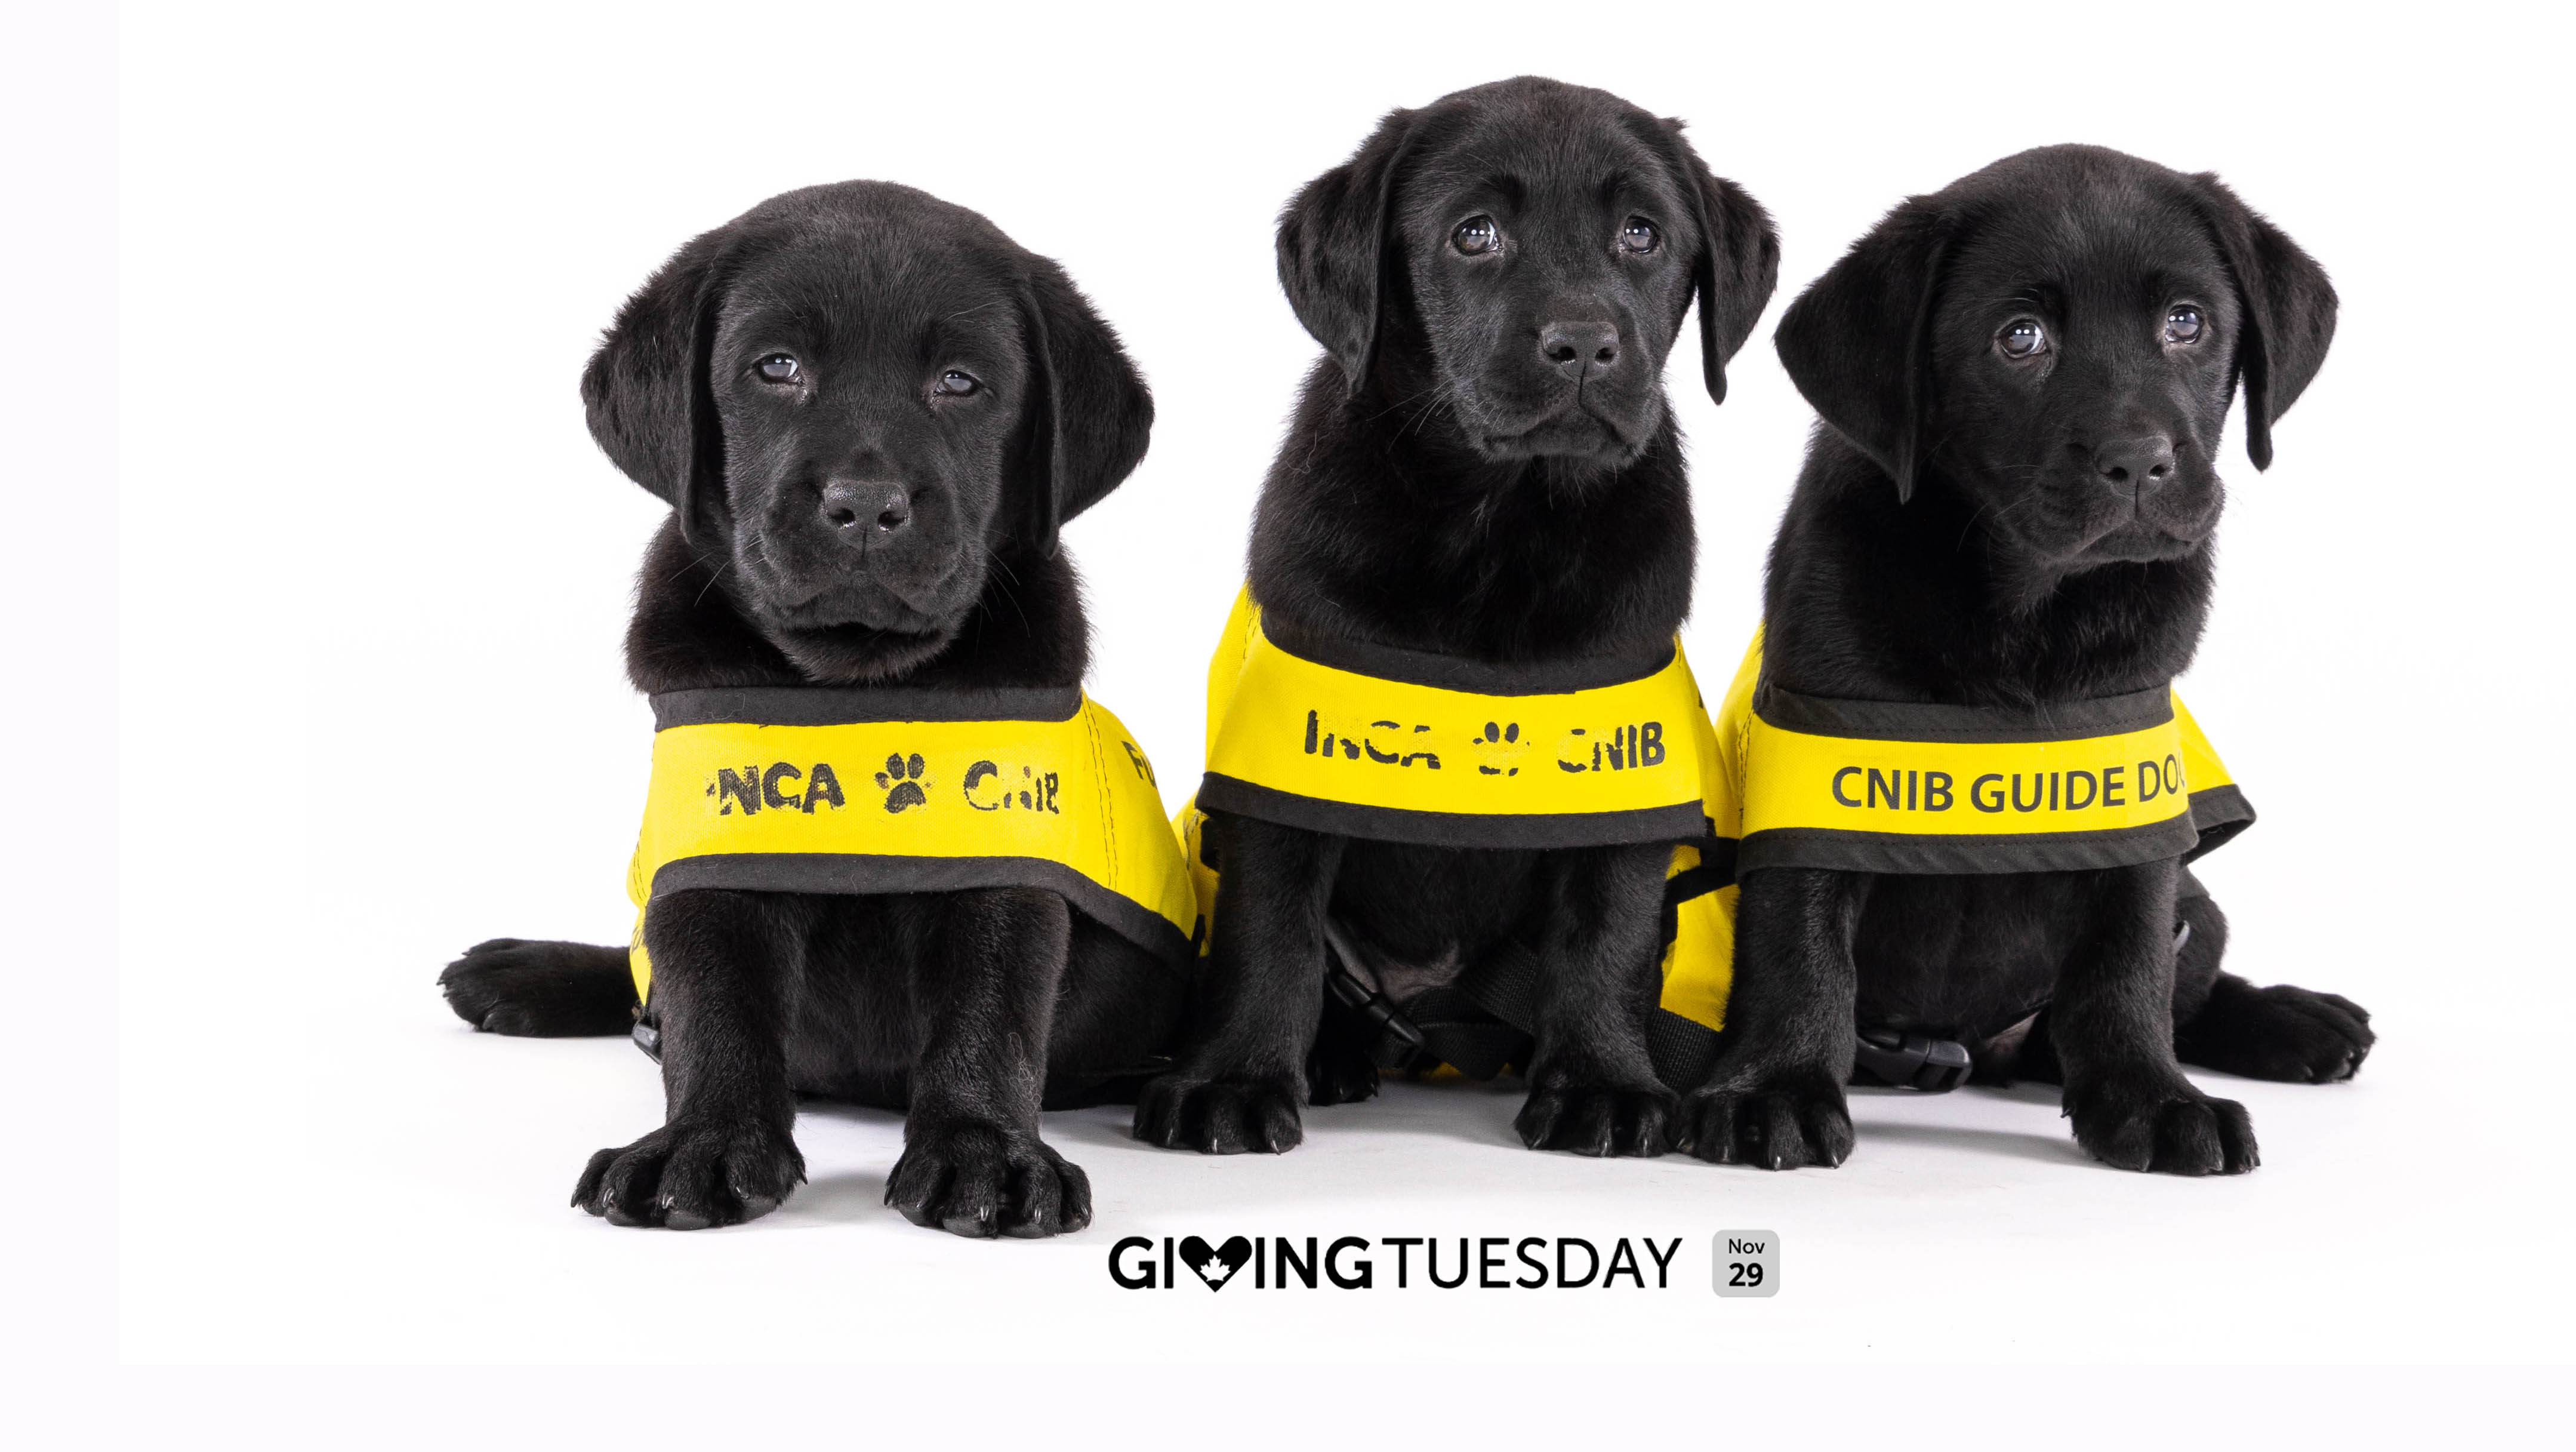 Three black Labrador puppies wearing bright yellow Future CNIB Guide Dog vests.